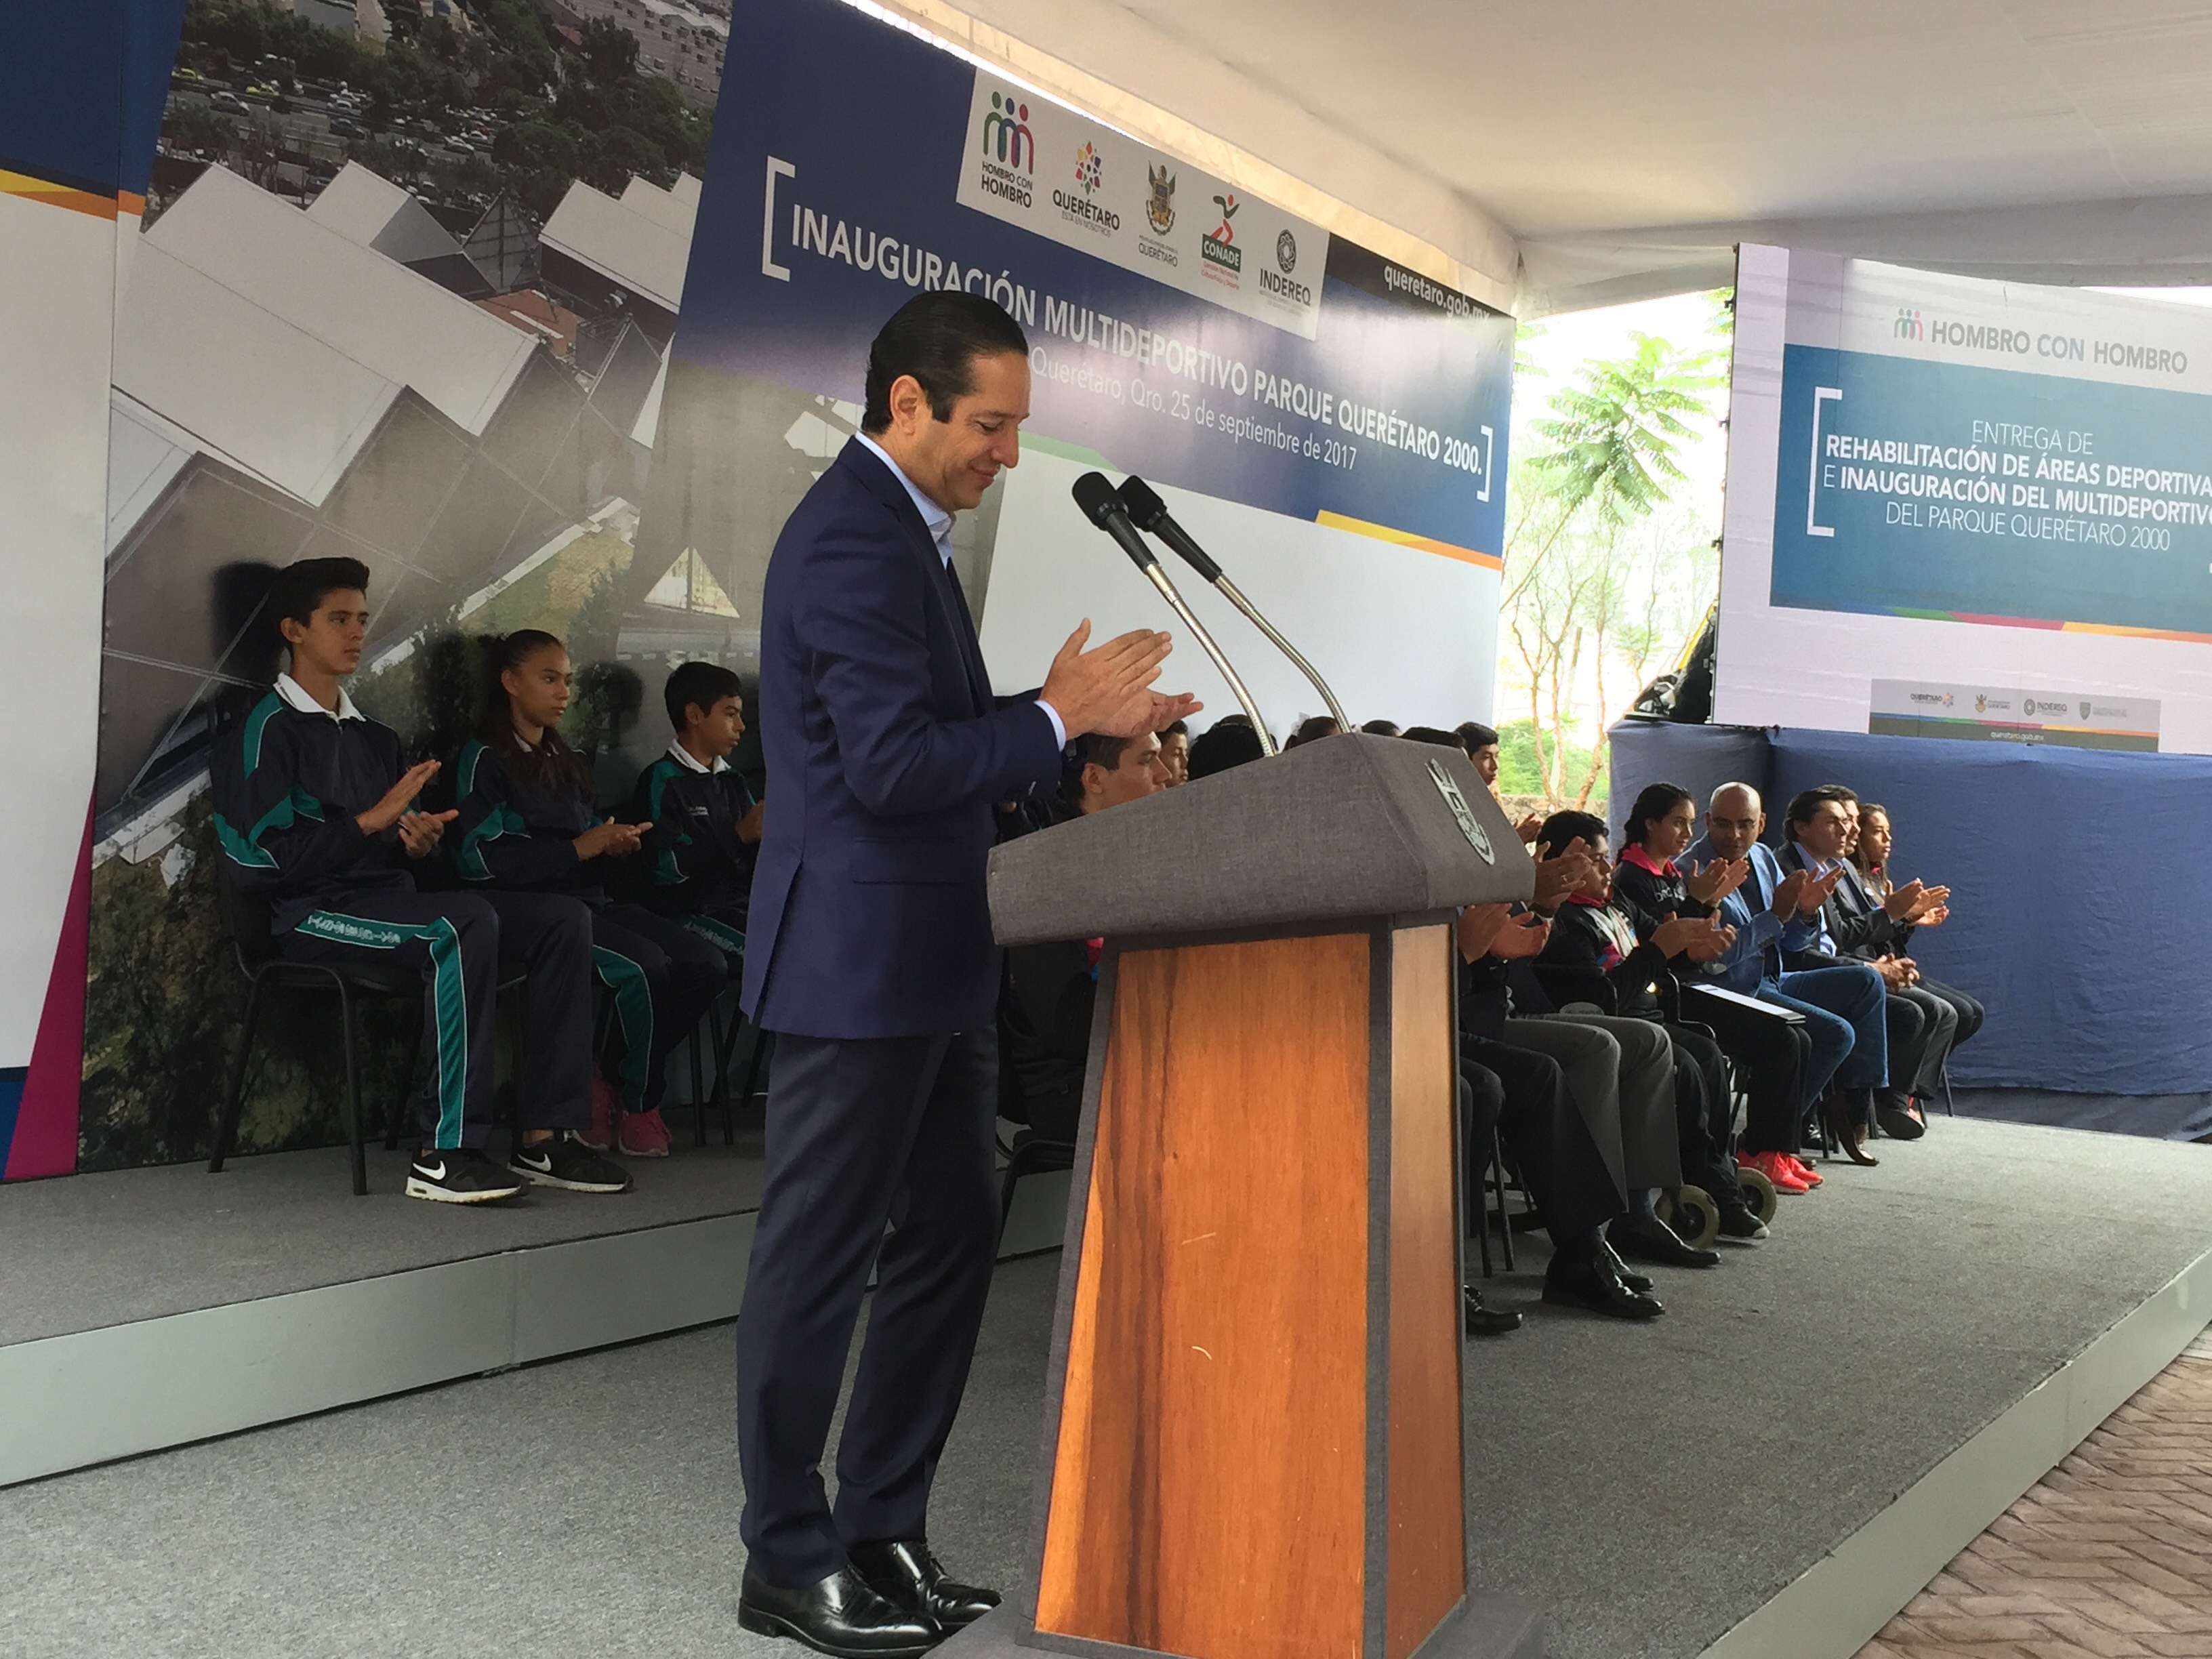  Con inversión de 71 mdp, Pancho Domínguez inaugura multideportivo del Parque Querétaro 2000